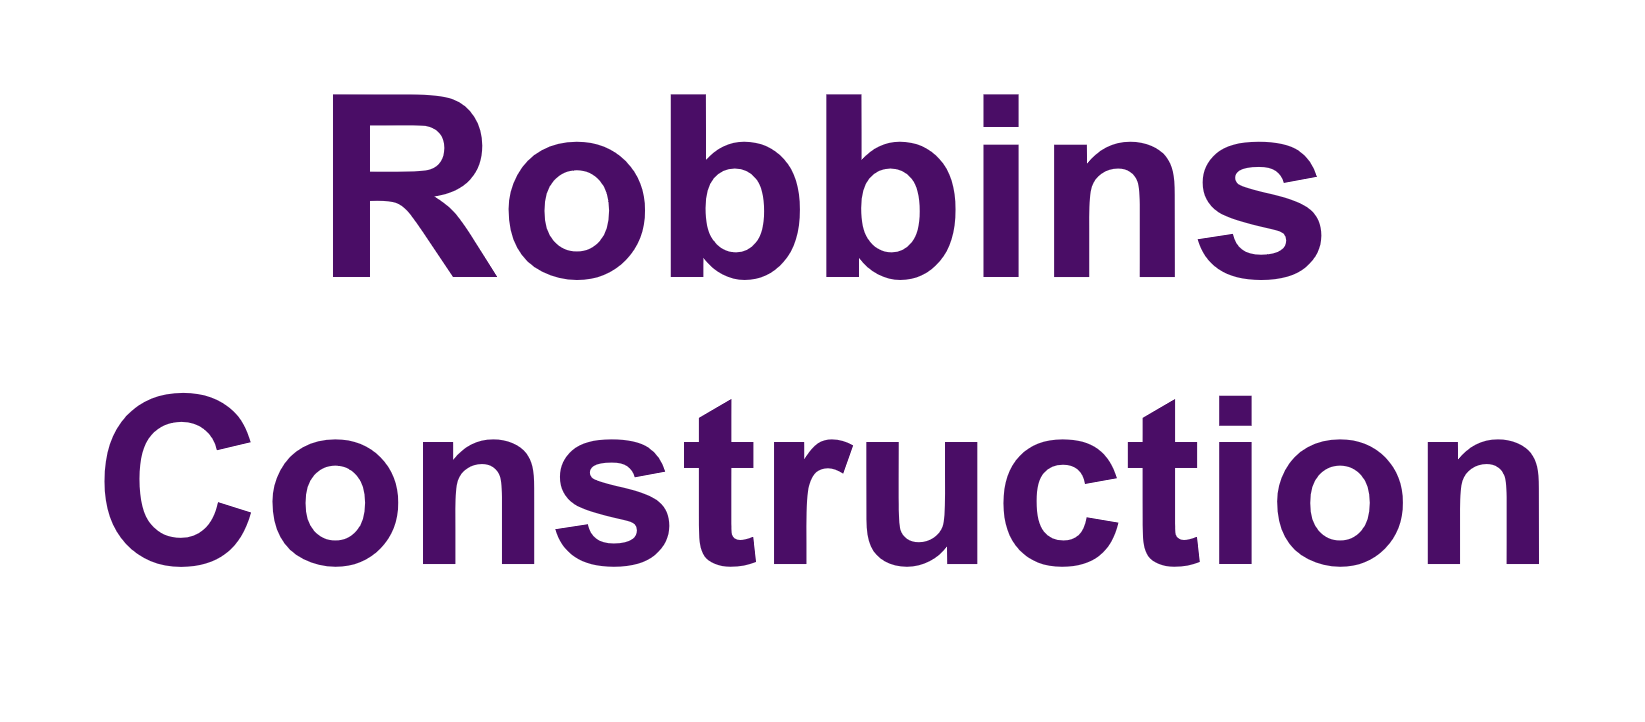 6h. Robbins Construction (Partner)